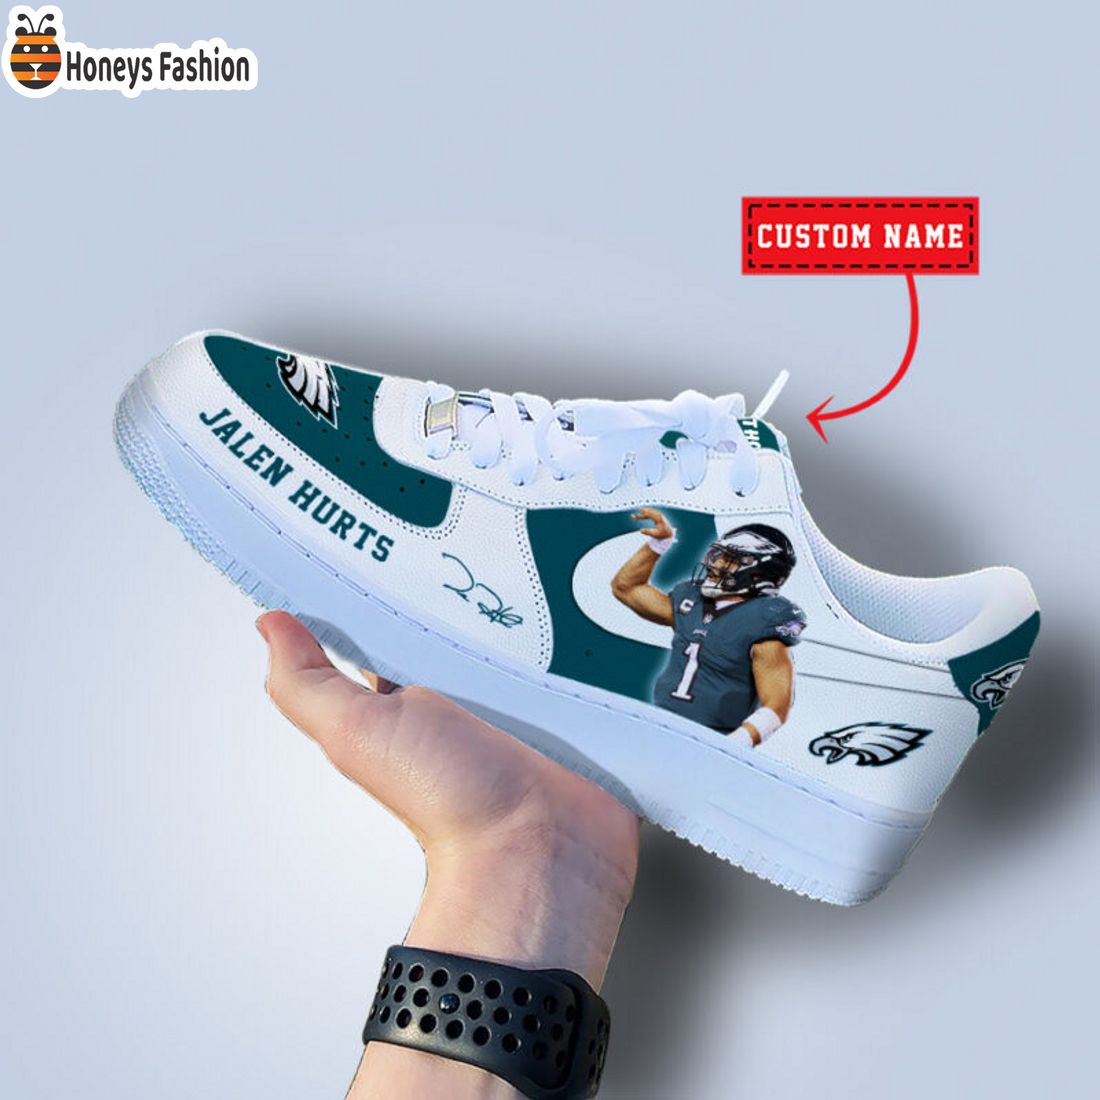 TOP SELLER Jalen Hurts Philadelphia Eagles NFL Custom Name Nike Air Force Shoes